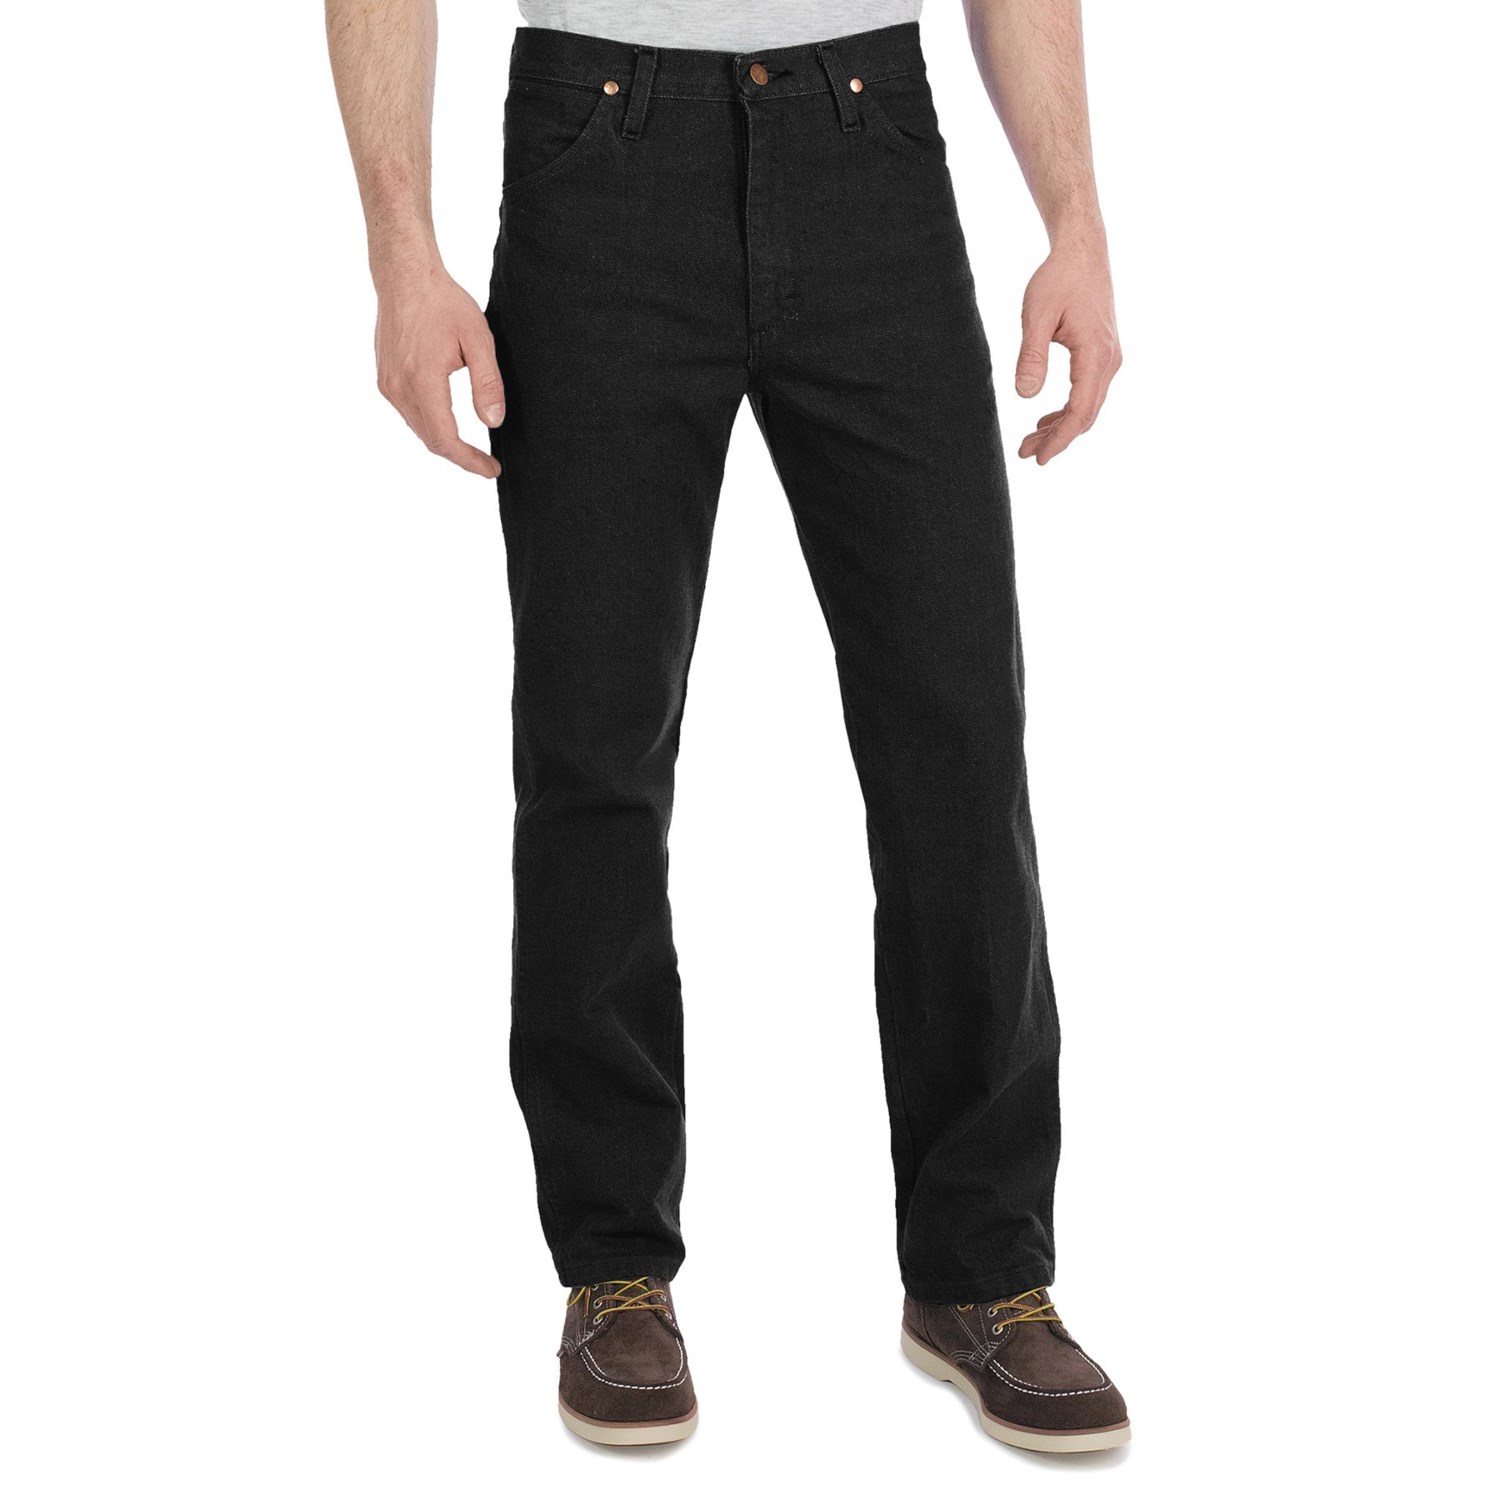 Wrangler Cowboy Cut Slim Fit Jeans (For Men) - Save 42%